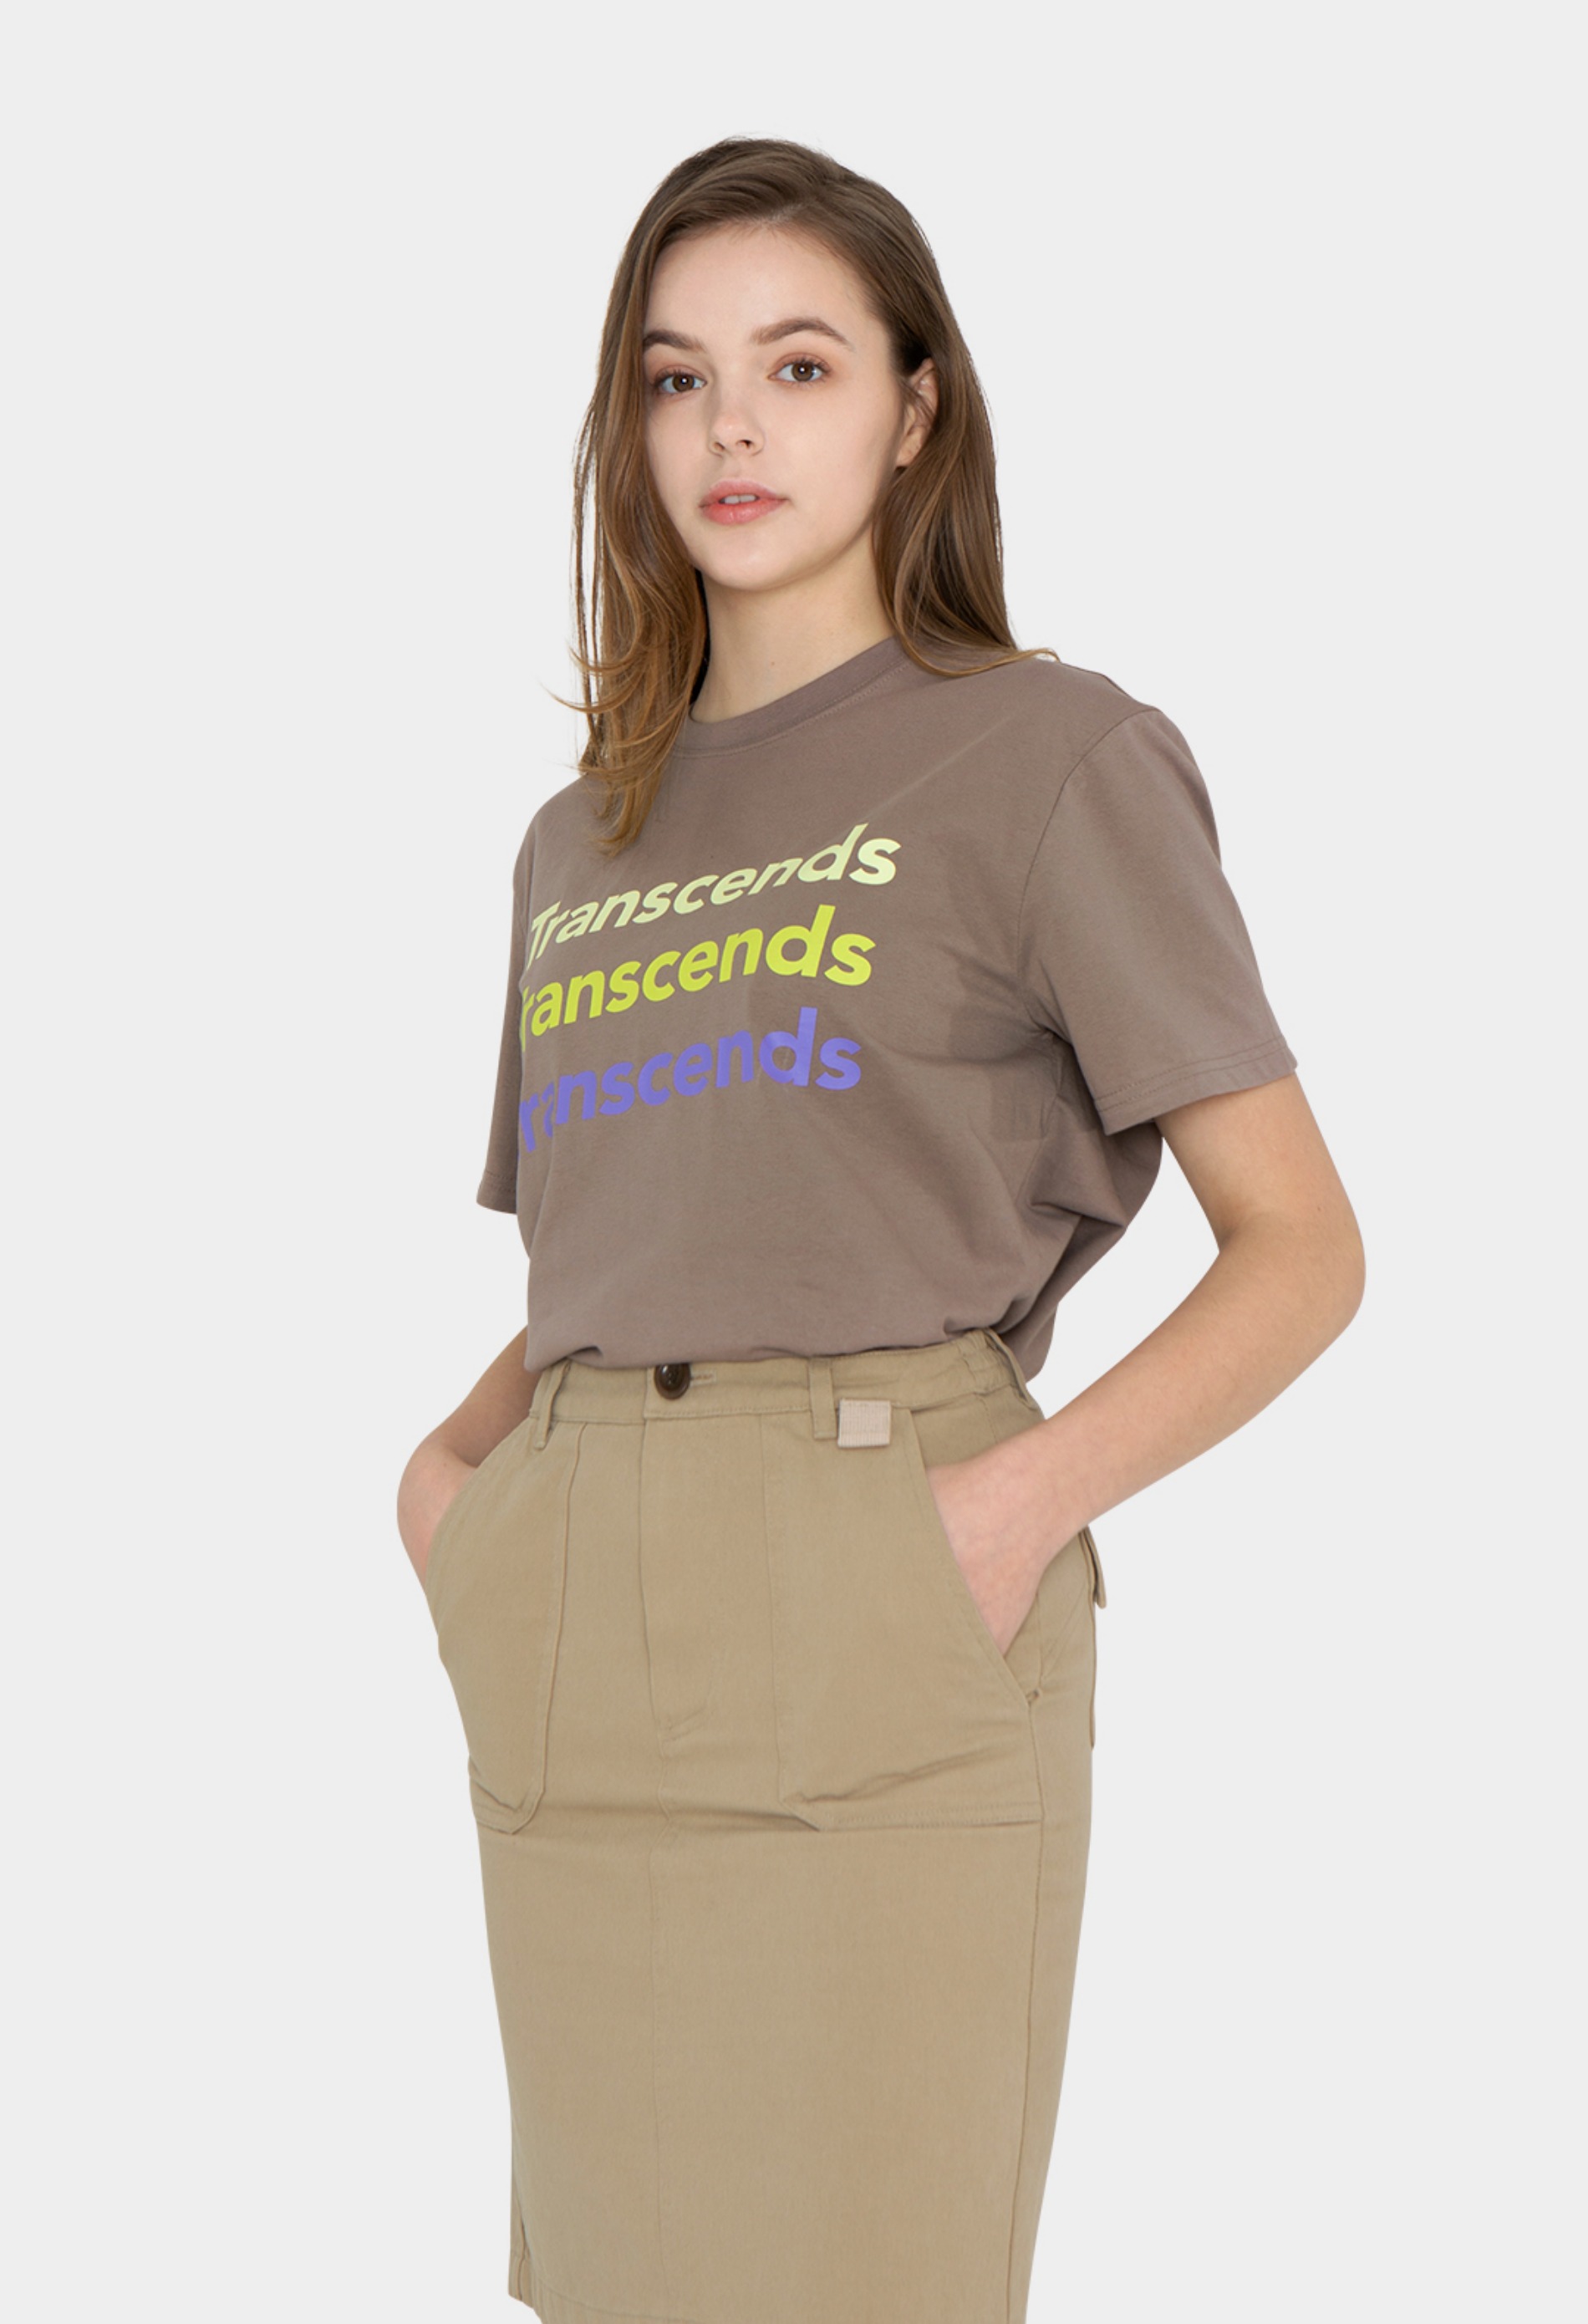 keek [Unisex] Transcends Graphic T-shirts - Cocoa 스트릿패션 유니섹스브랜드 커플시밀러룩 남자쇼핑몰 여성의류쇼핑몰 후드티 힙색